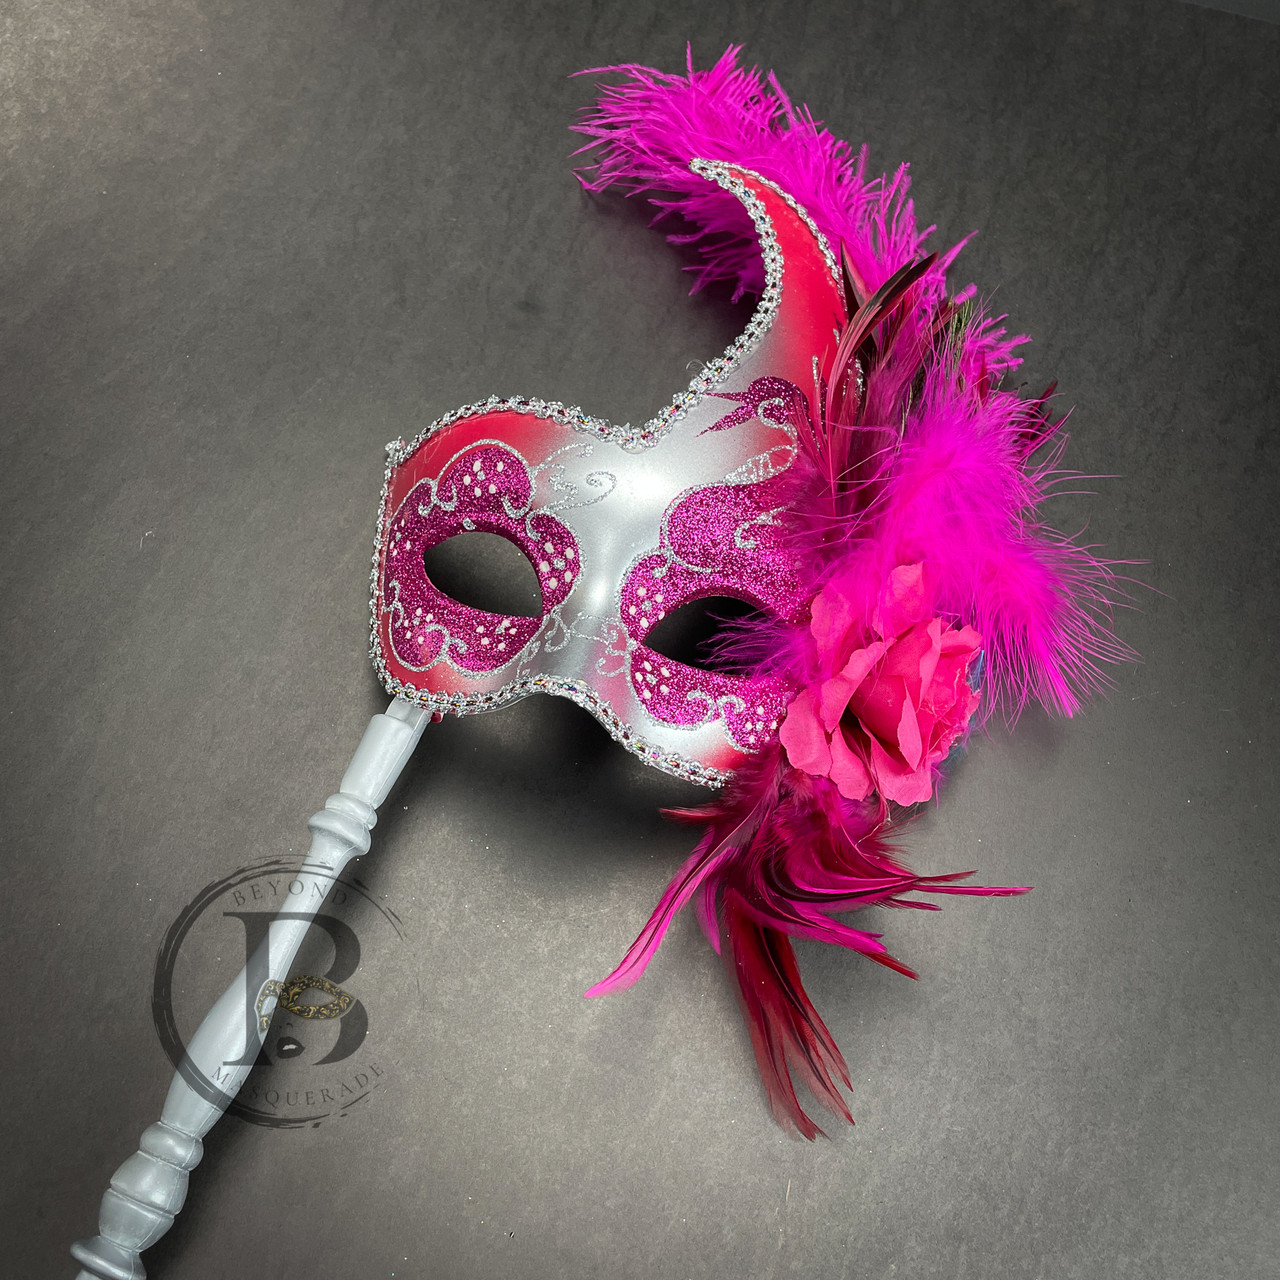 female masquerade masks on a stick